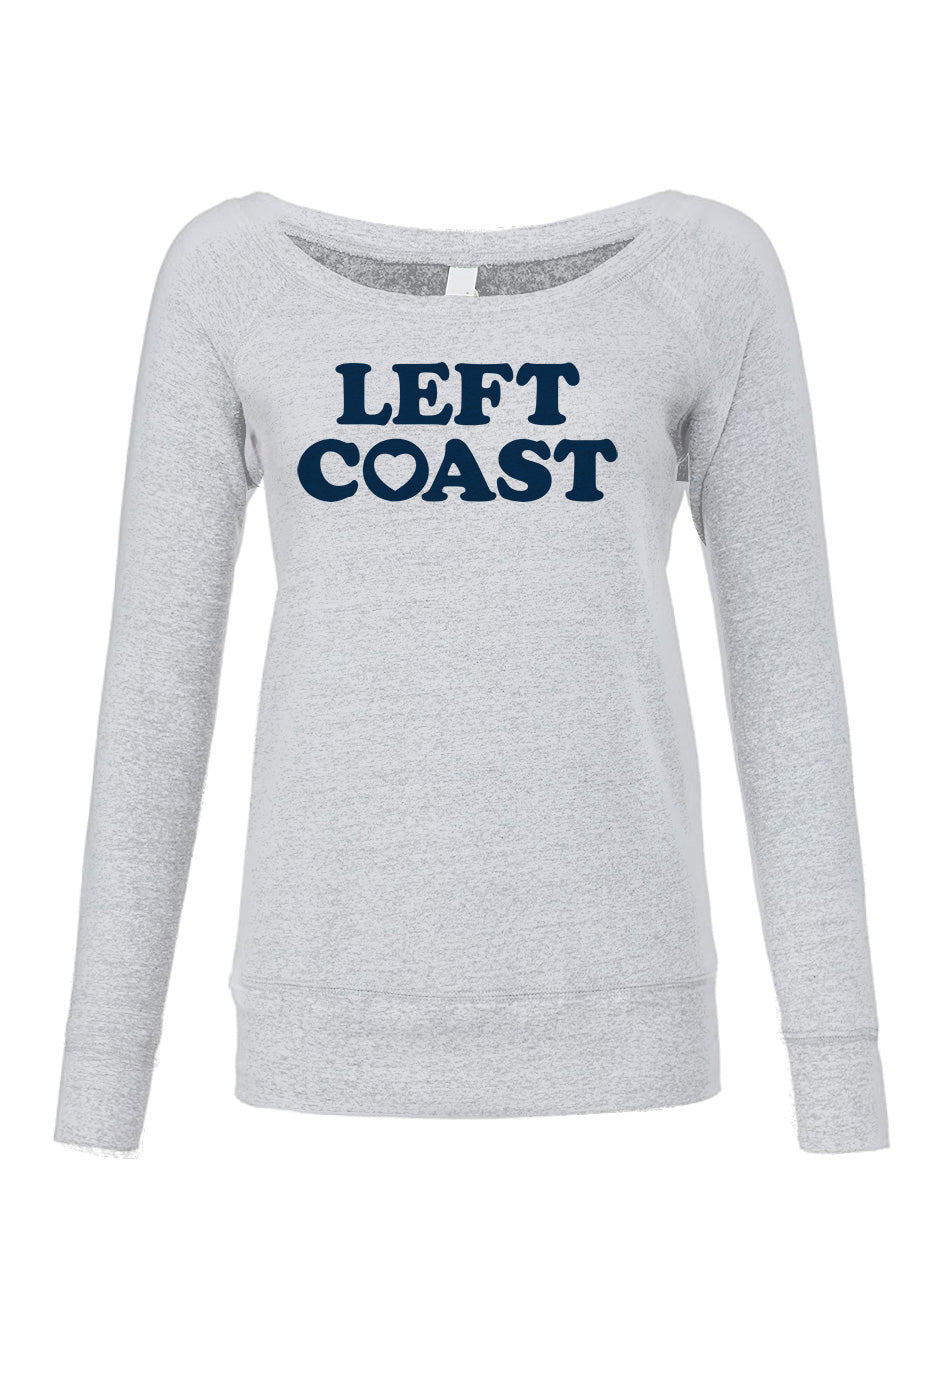 Women's Left Coast Scoop Neck Fleece - California Oregon Washingon West Coast